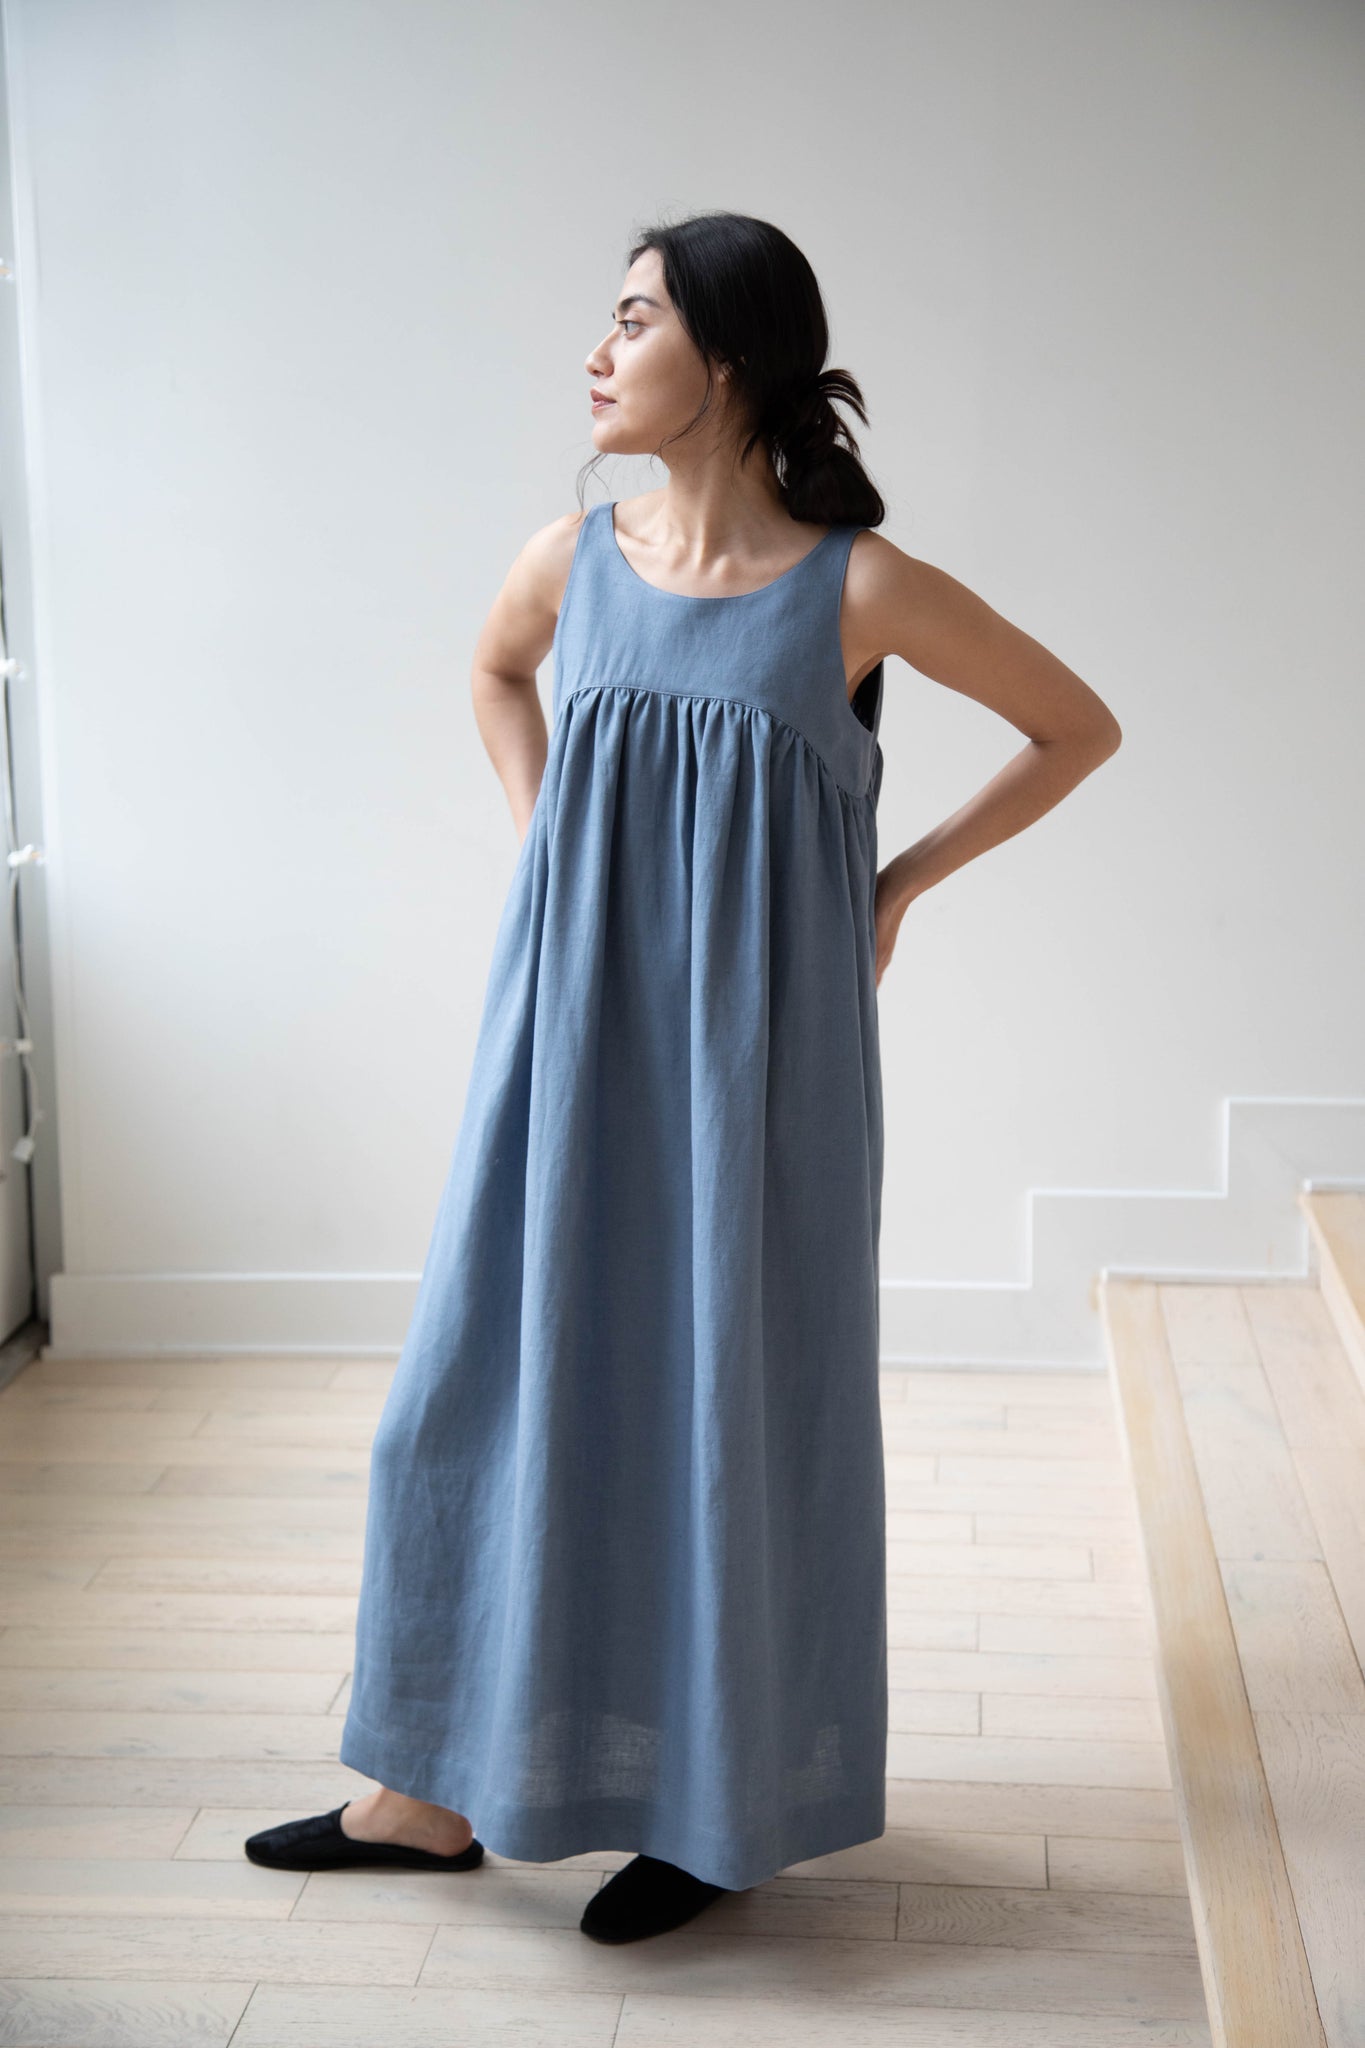 The Loom Linen Empire Dress in Blue Linen